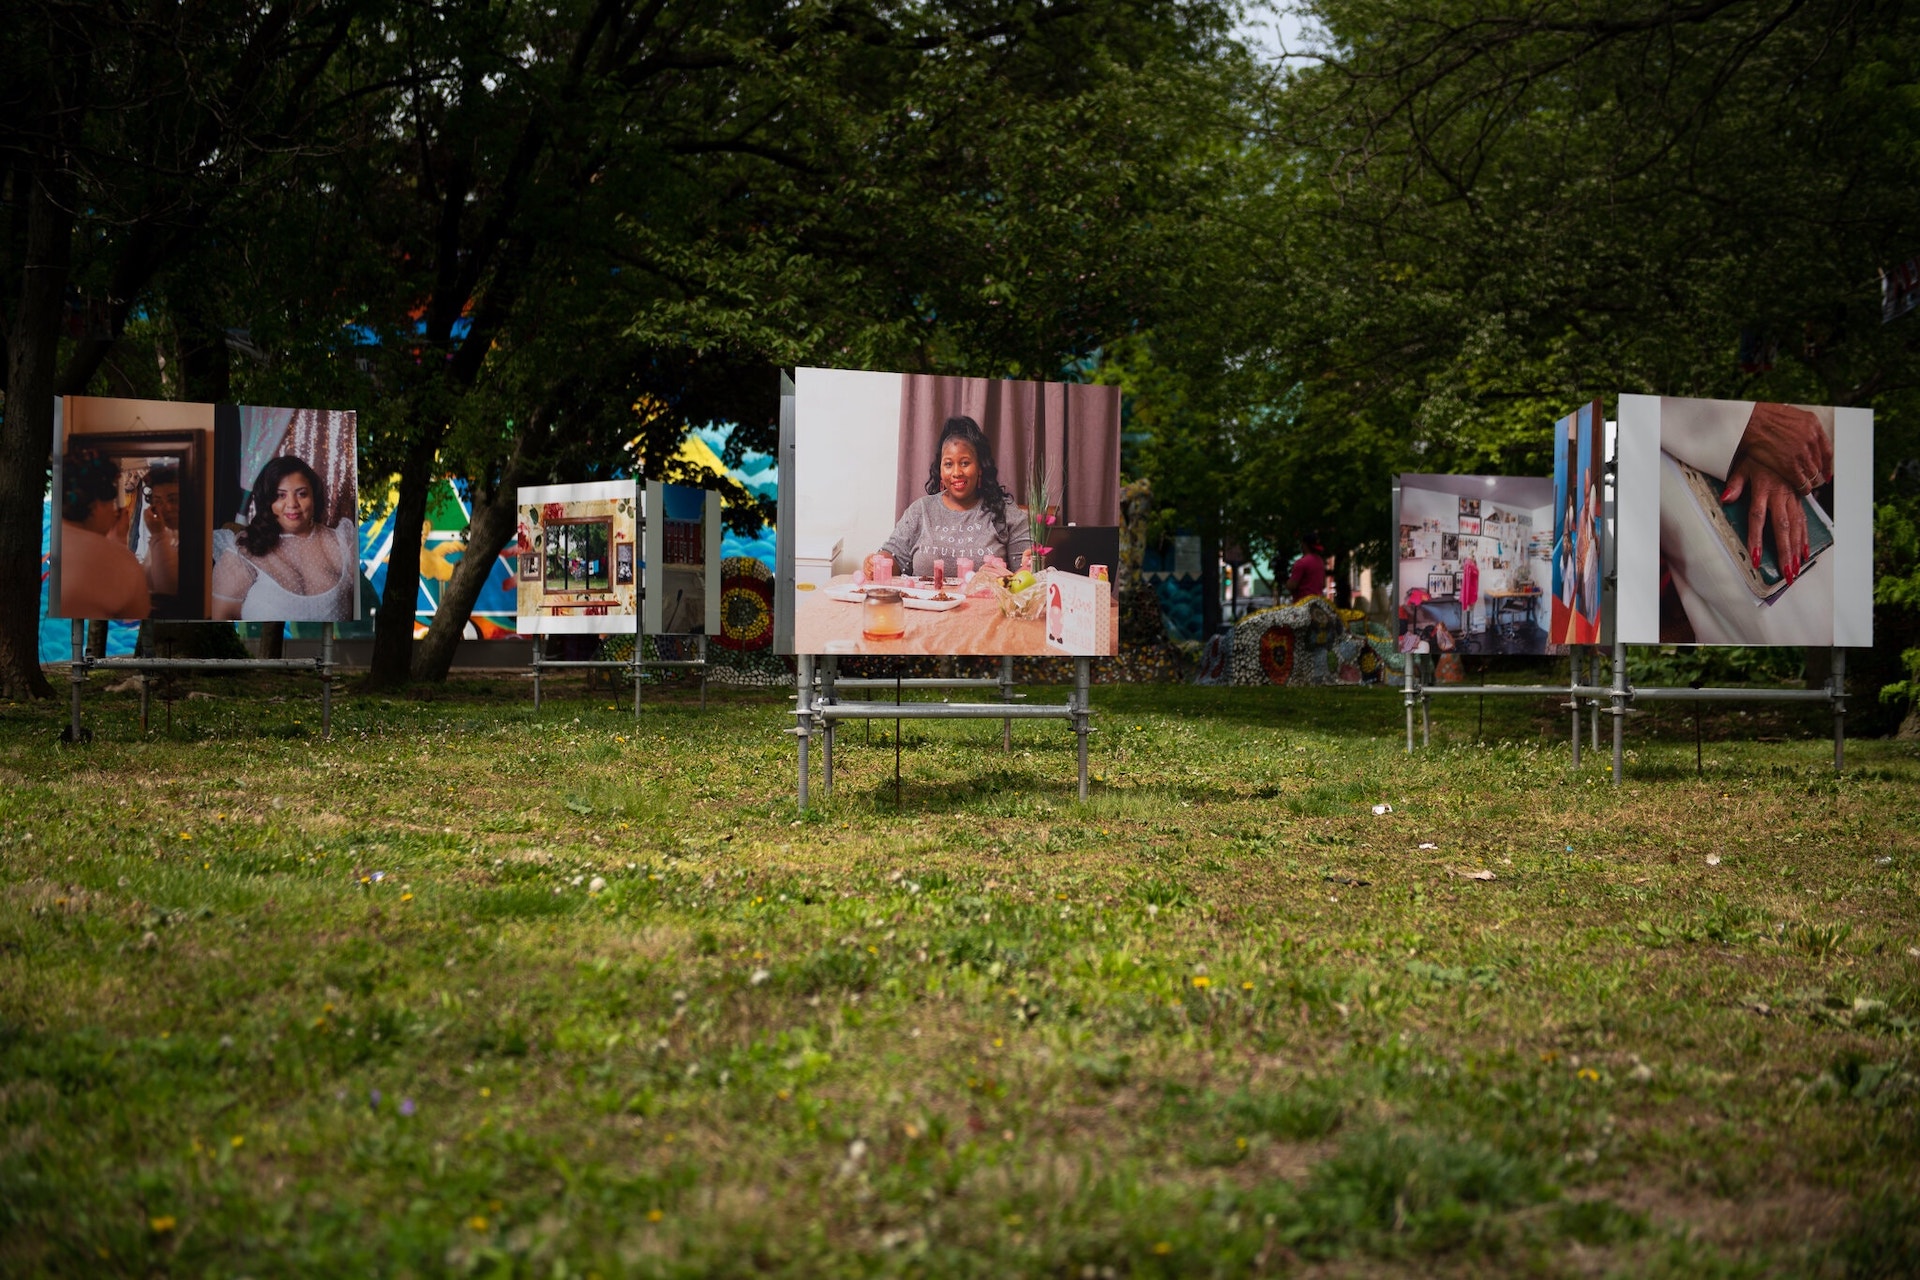 Deborah Willis's photographs in "Black Women and Work installed in a Philadelphia park